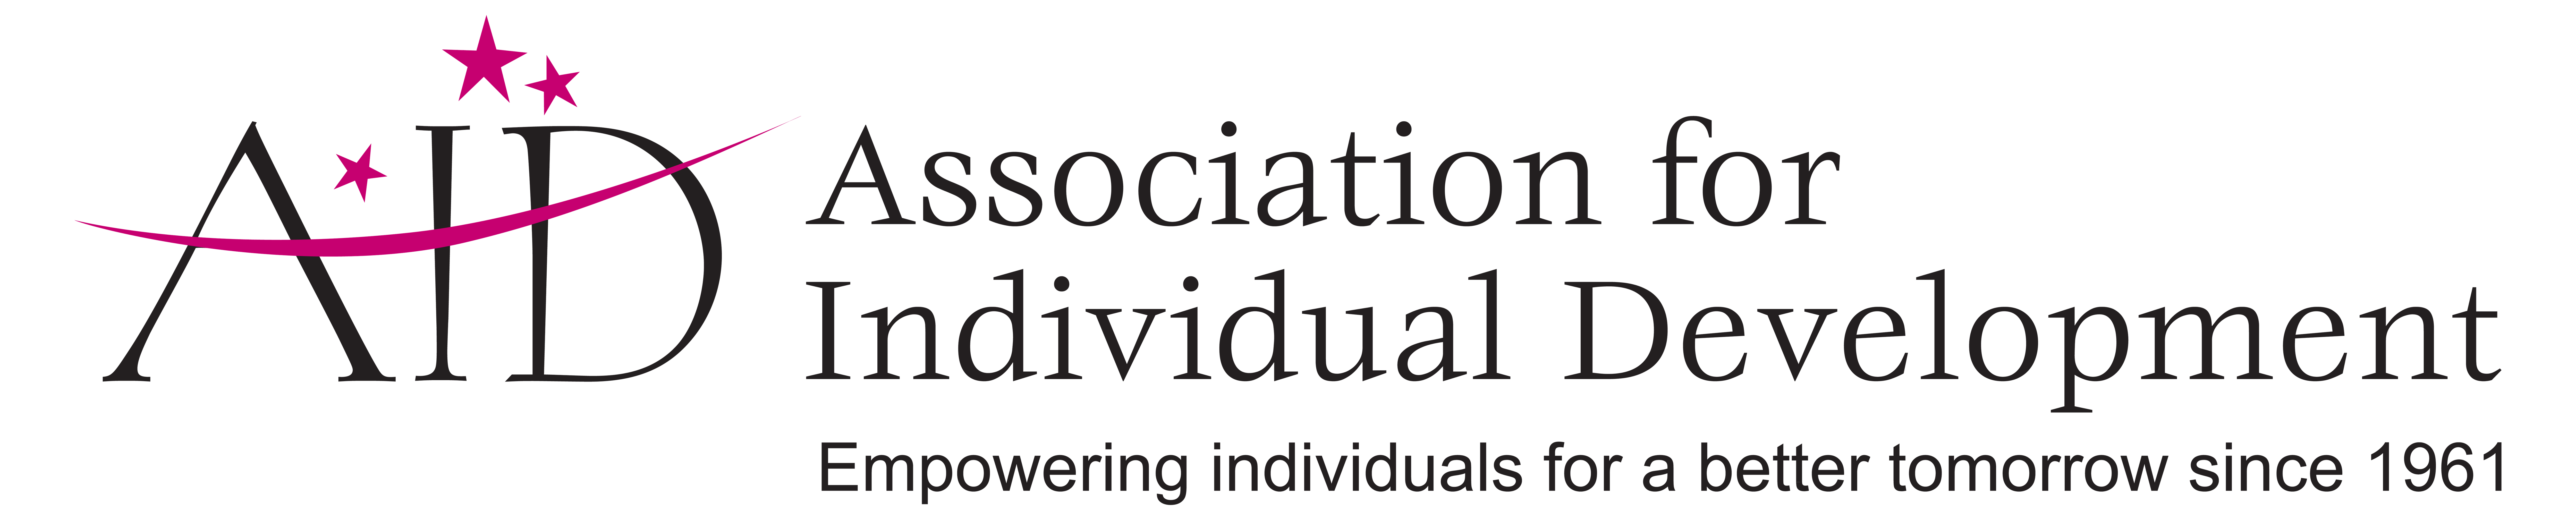 Association for Individual Development